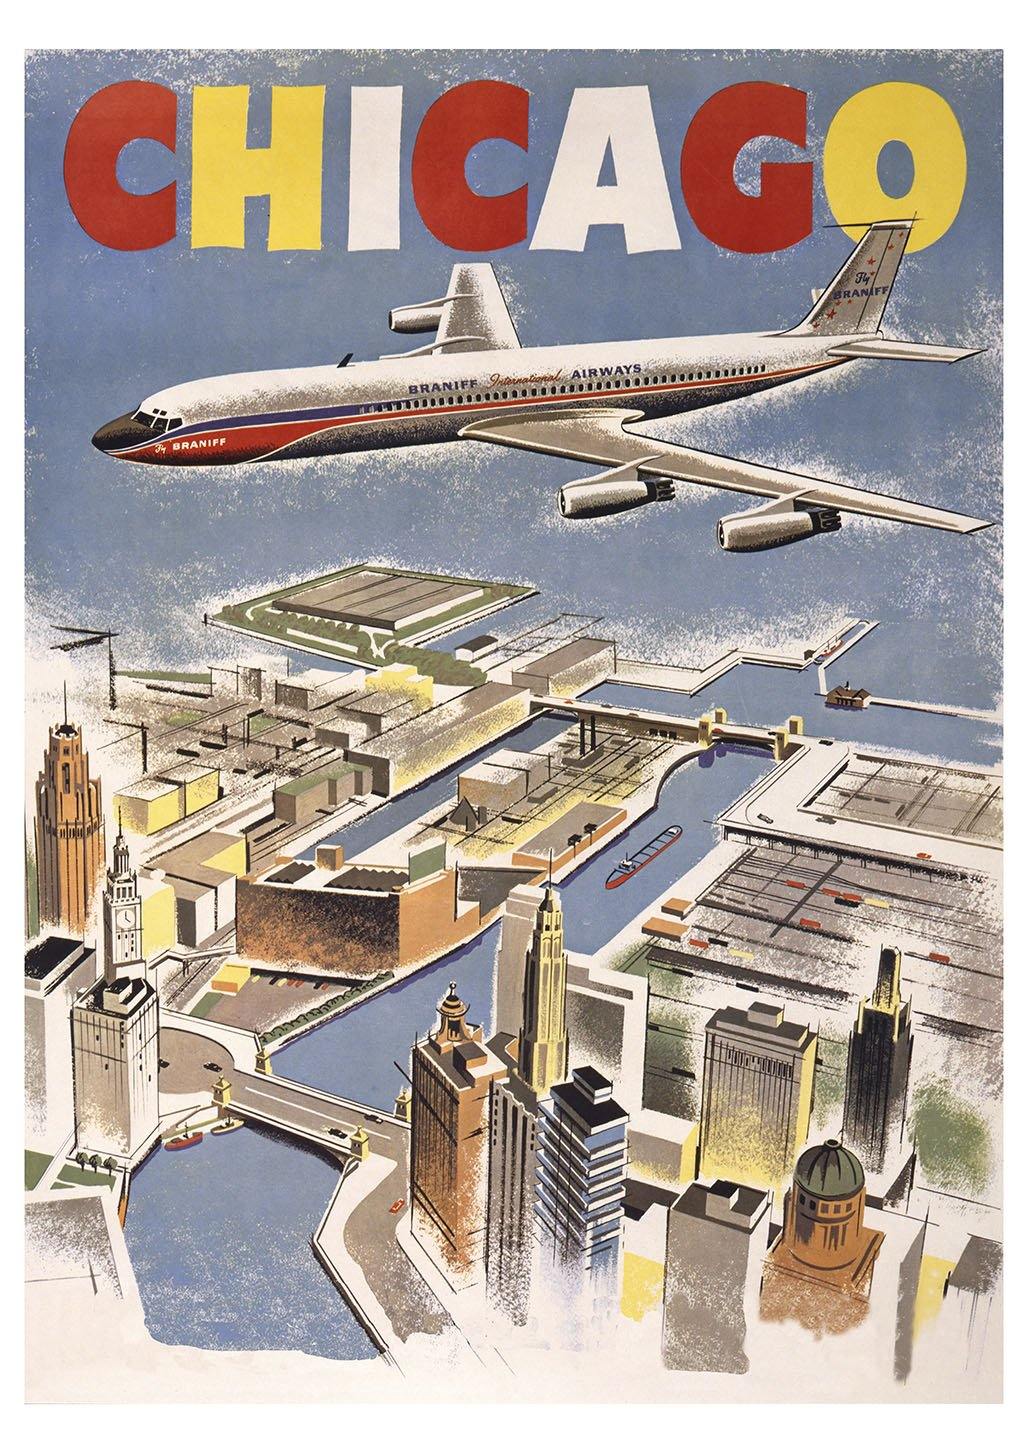 CHICAGO POSTER: Vintage Airline Advert Print - Pimlico Prints